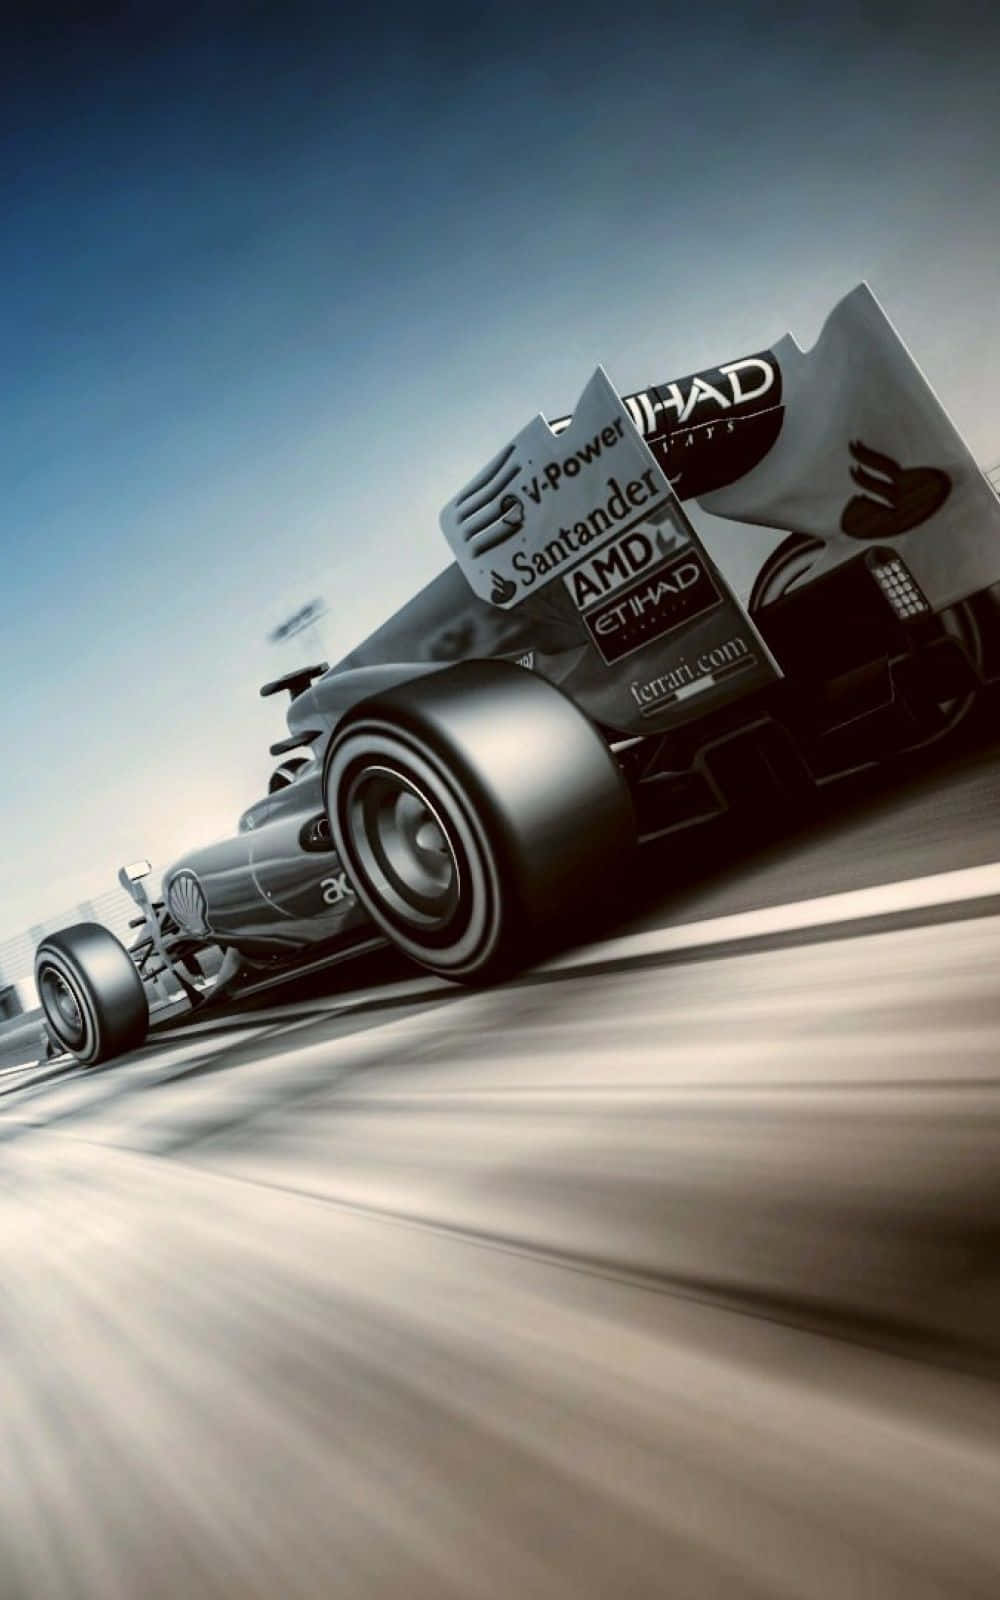 Pixel 3xl F1 2016 Grayscale Ferrari Car Background